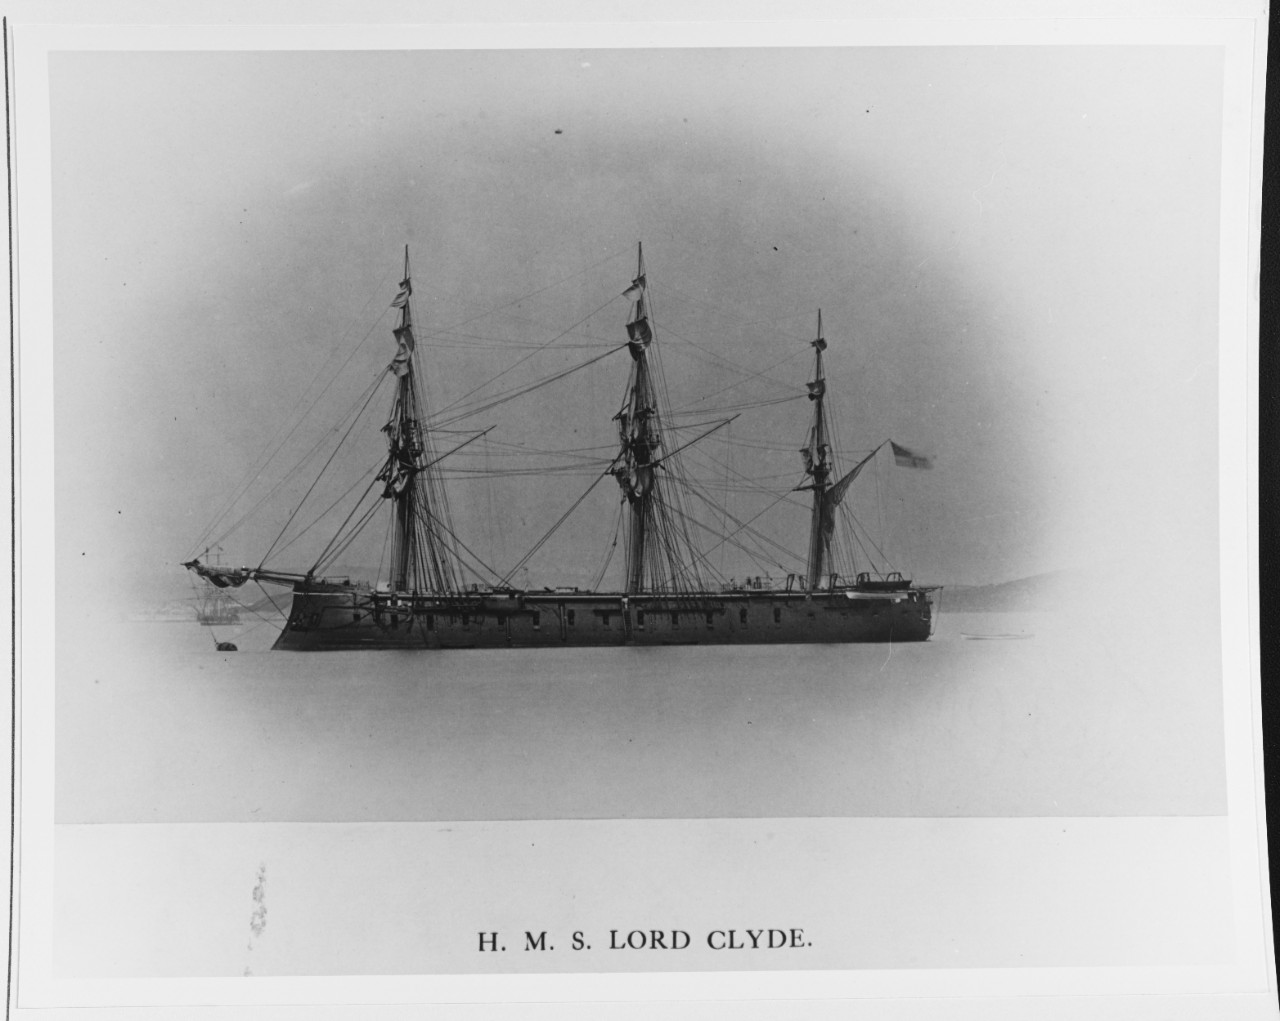 HMS LORD CLYDE (BRITISH BATTLESHIP, 1864)